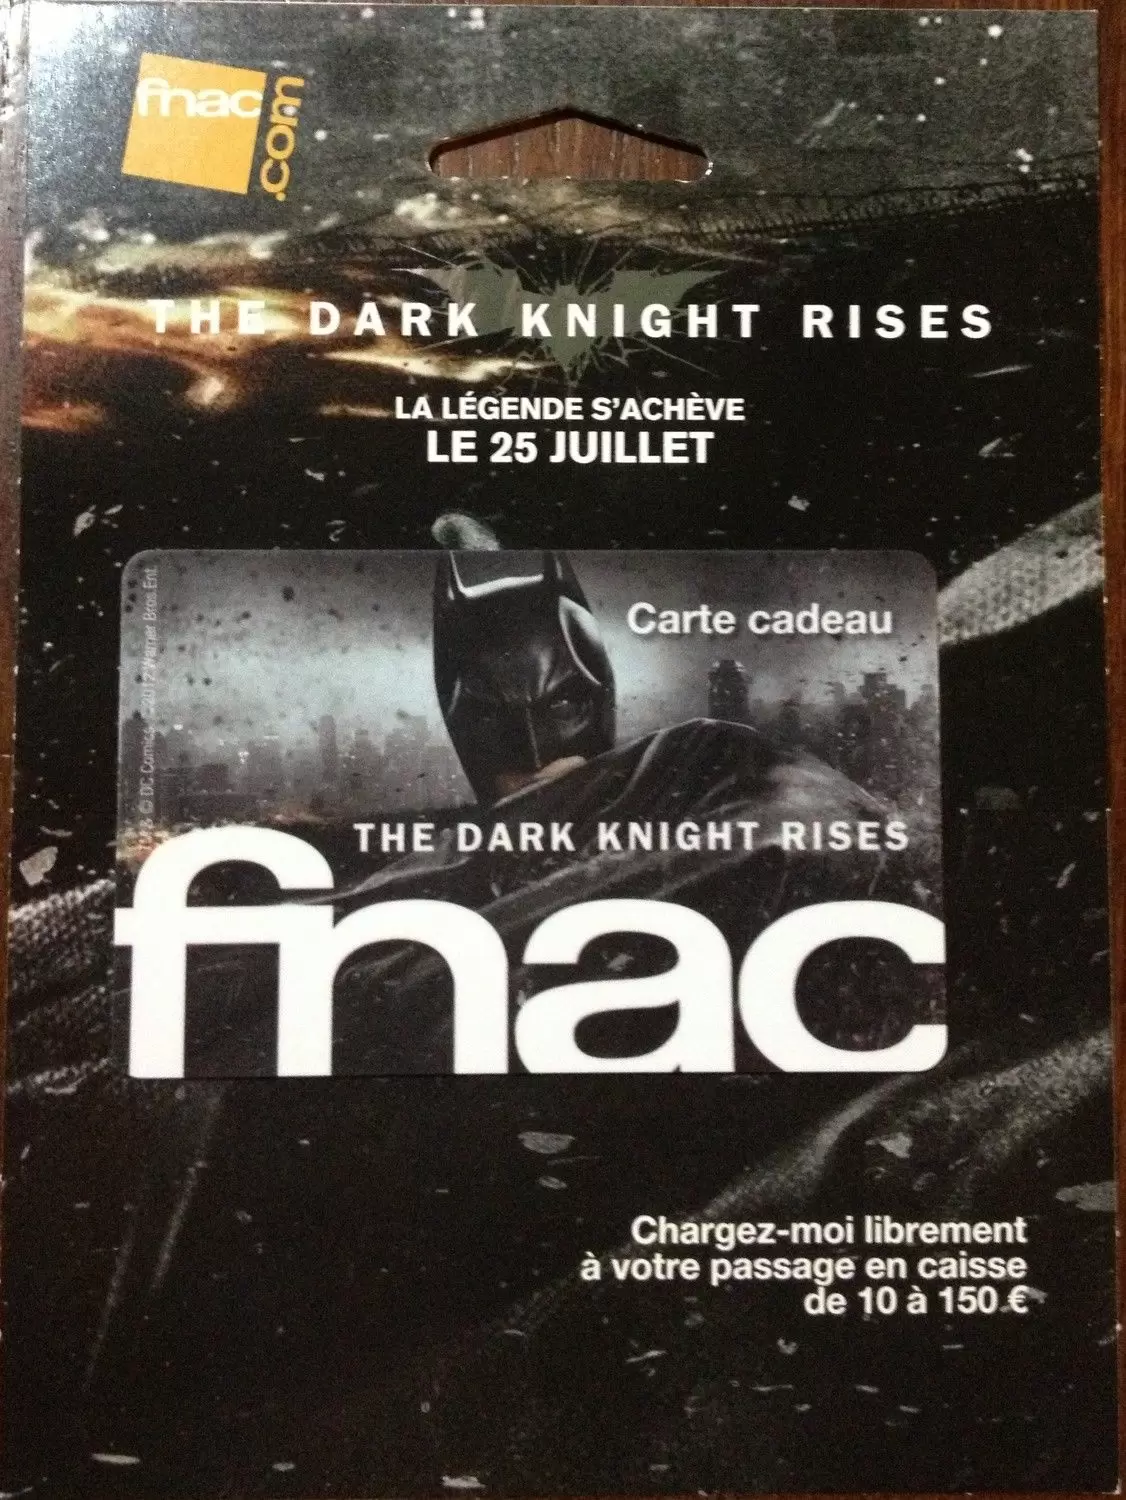 Cartes cadeau Fnac - Carte cadeau Fnac The Dark knight rises